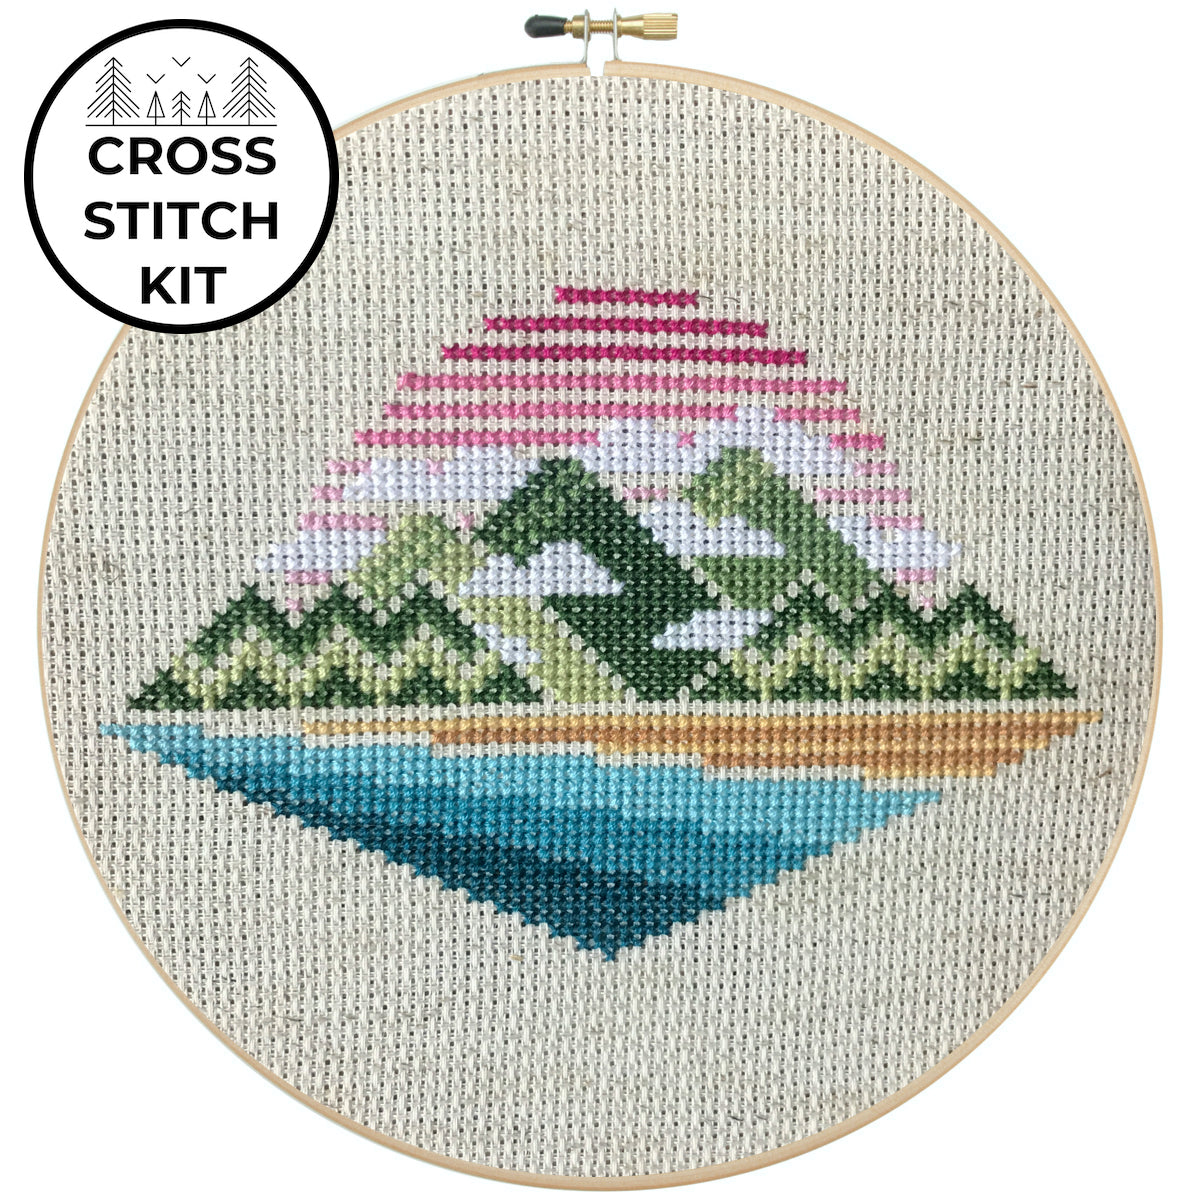 Cross stitch kit